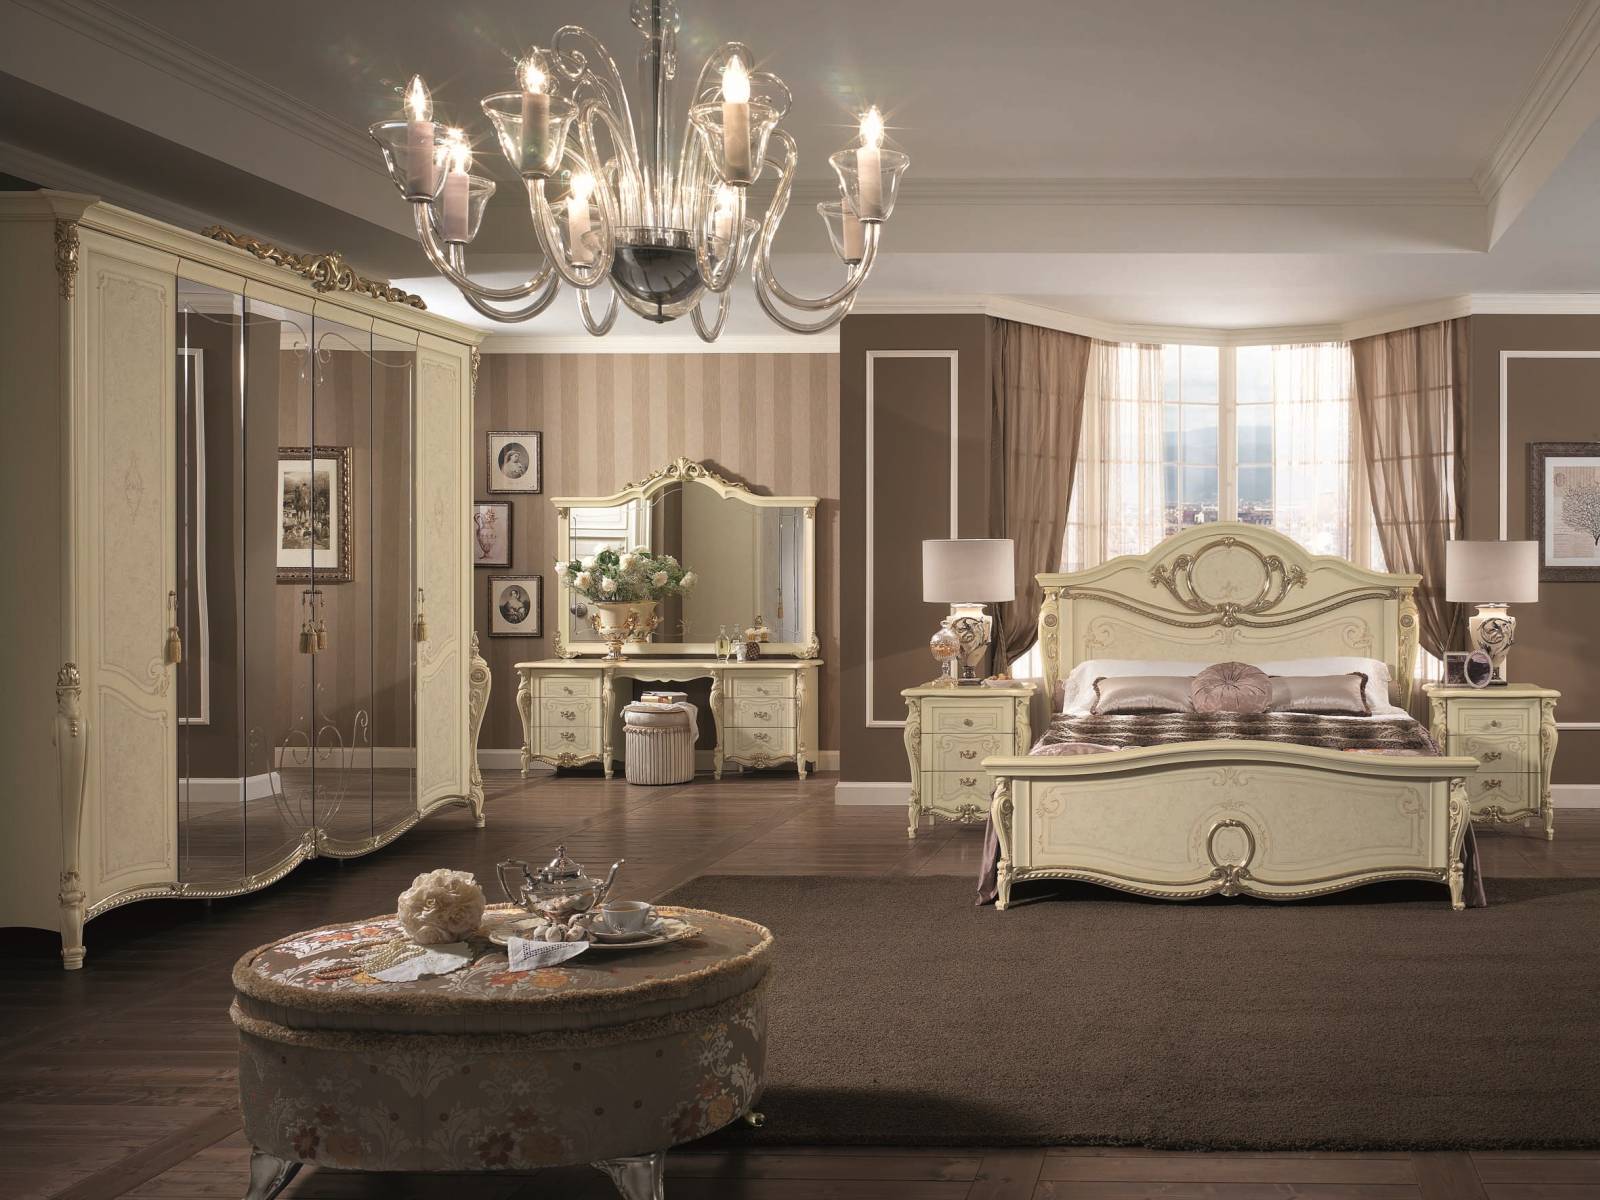 Baroque bedroom furniture – like the nobles sleep